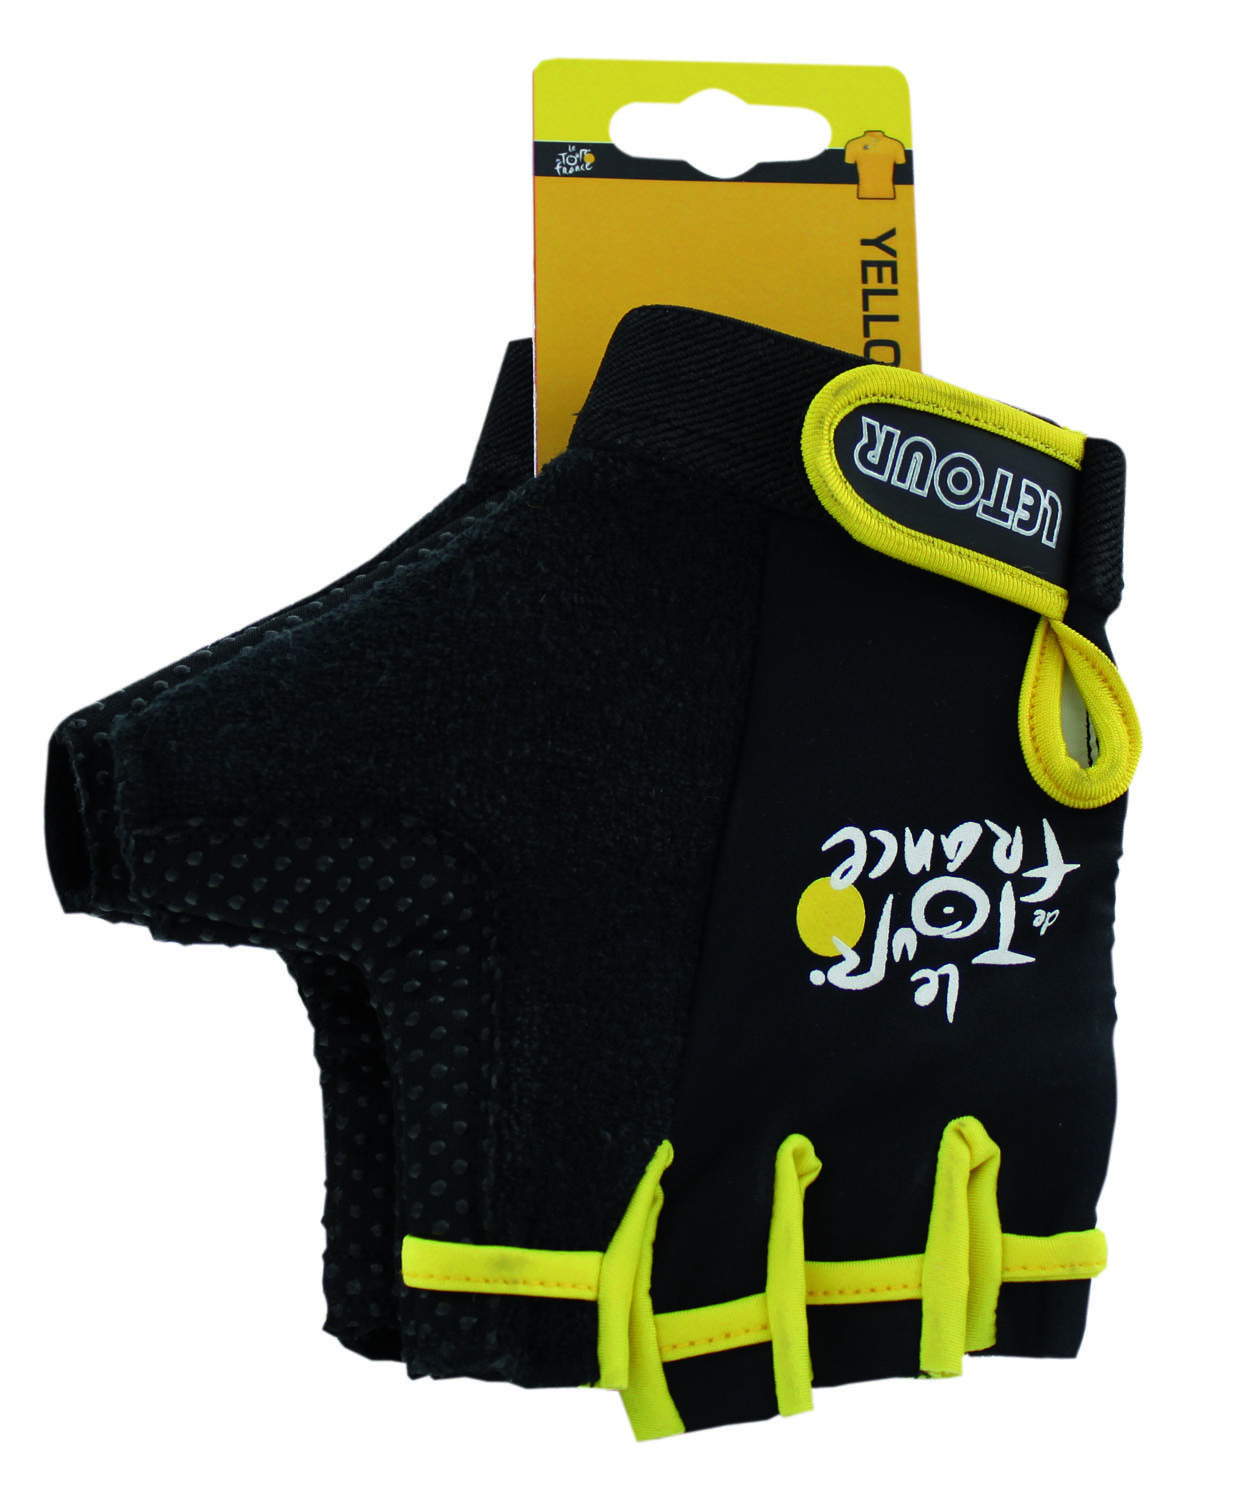 Tour De France Gloves Half Finger Gel Padding Medium Tour De France Gloves Half Finger Gel Padding Medium